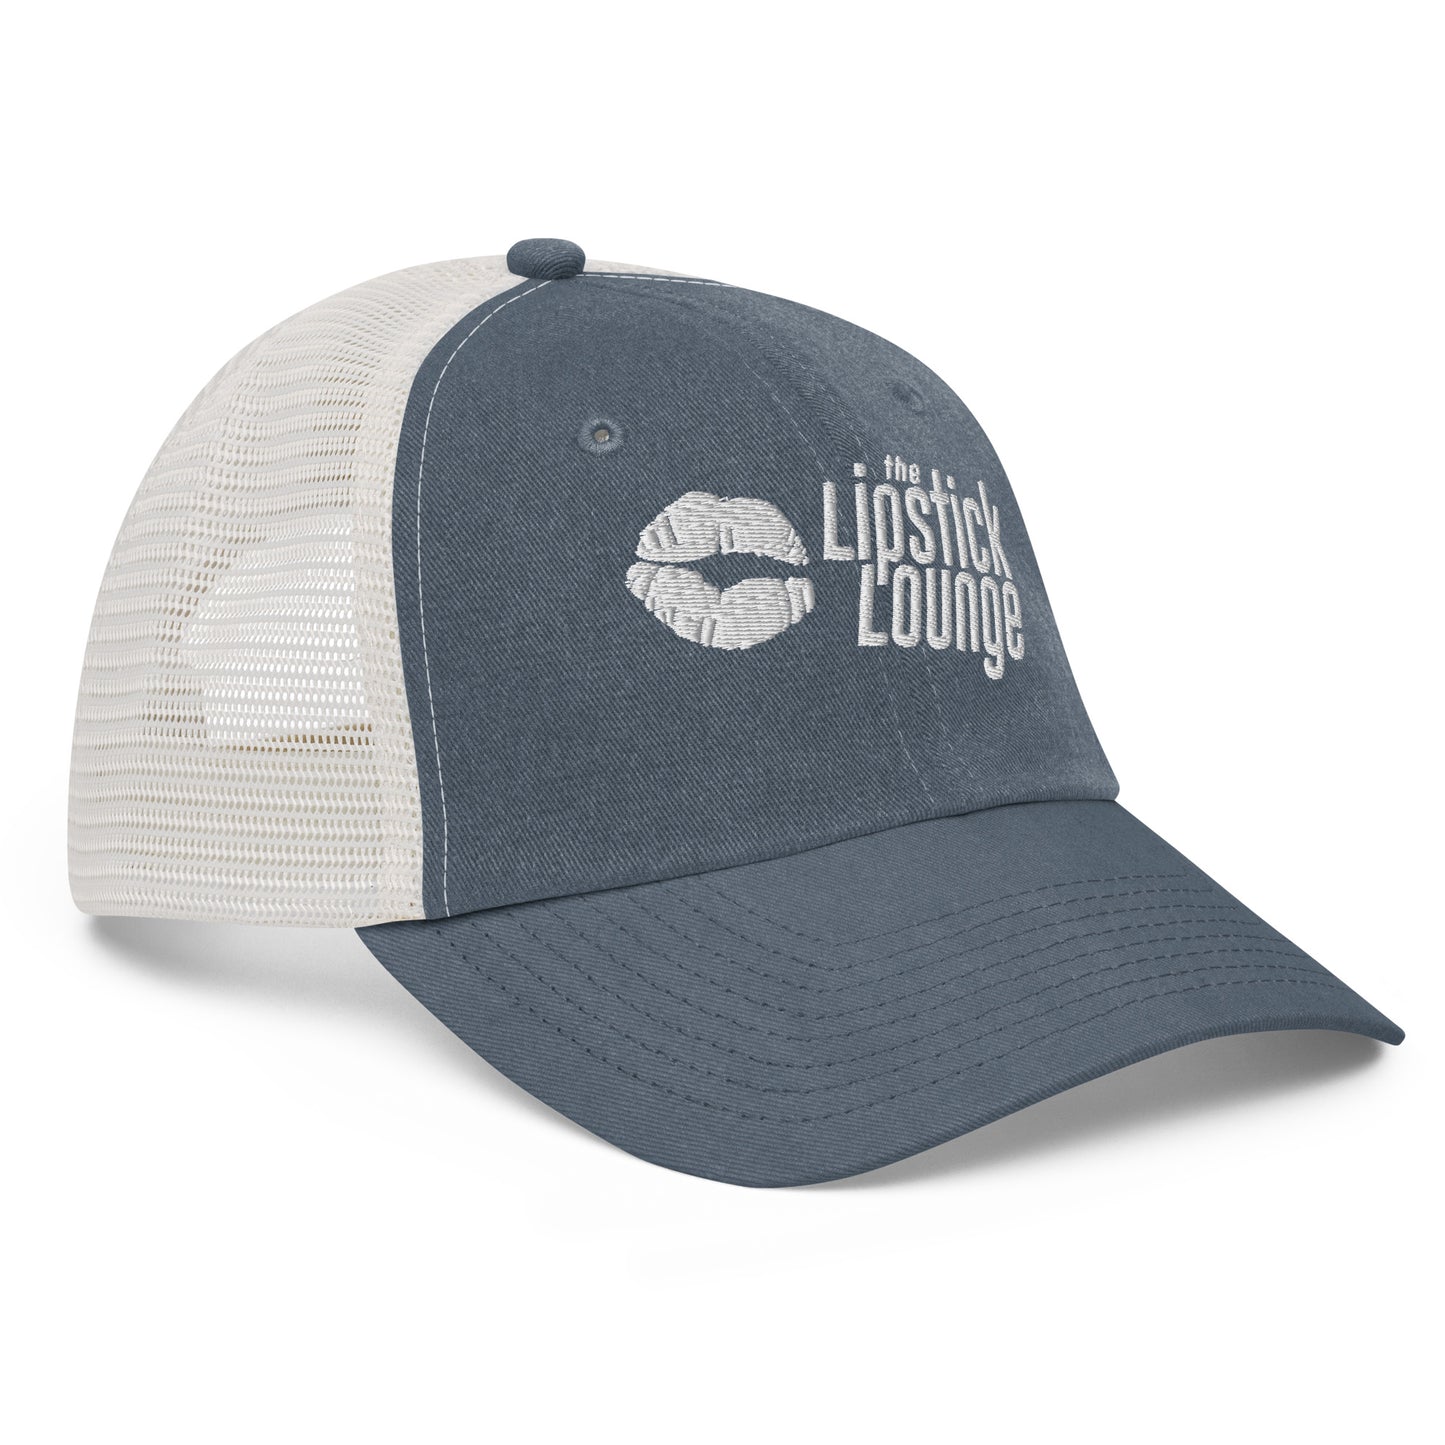 Lipstick Lounge White Logo Vintage Hat